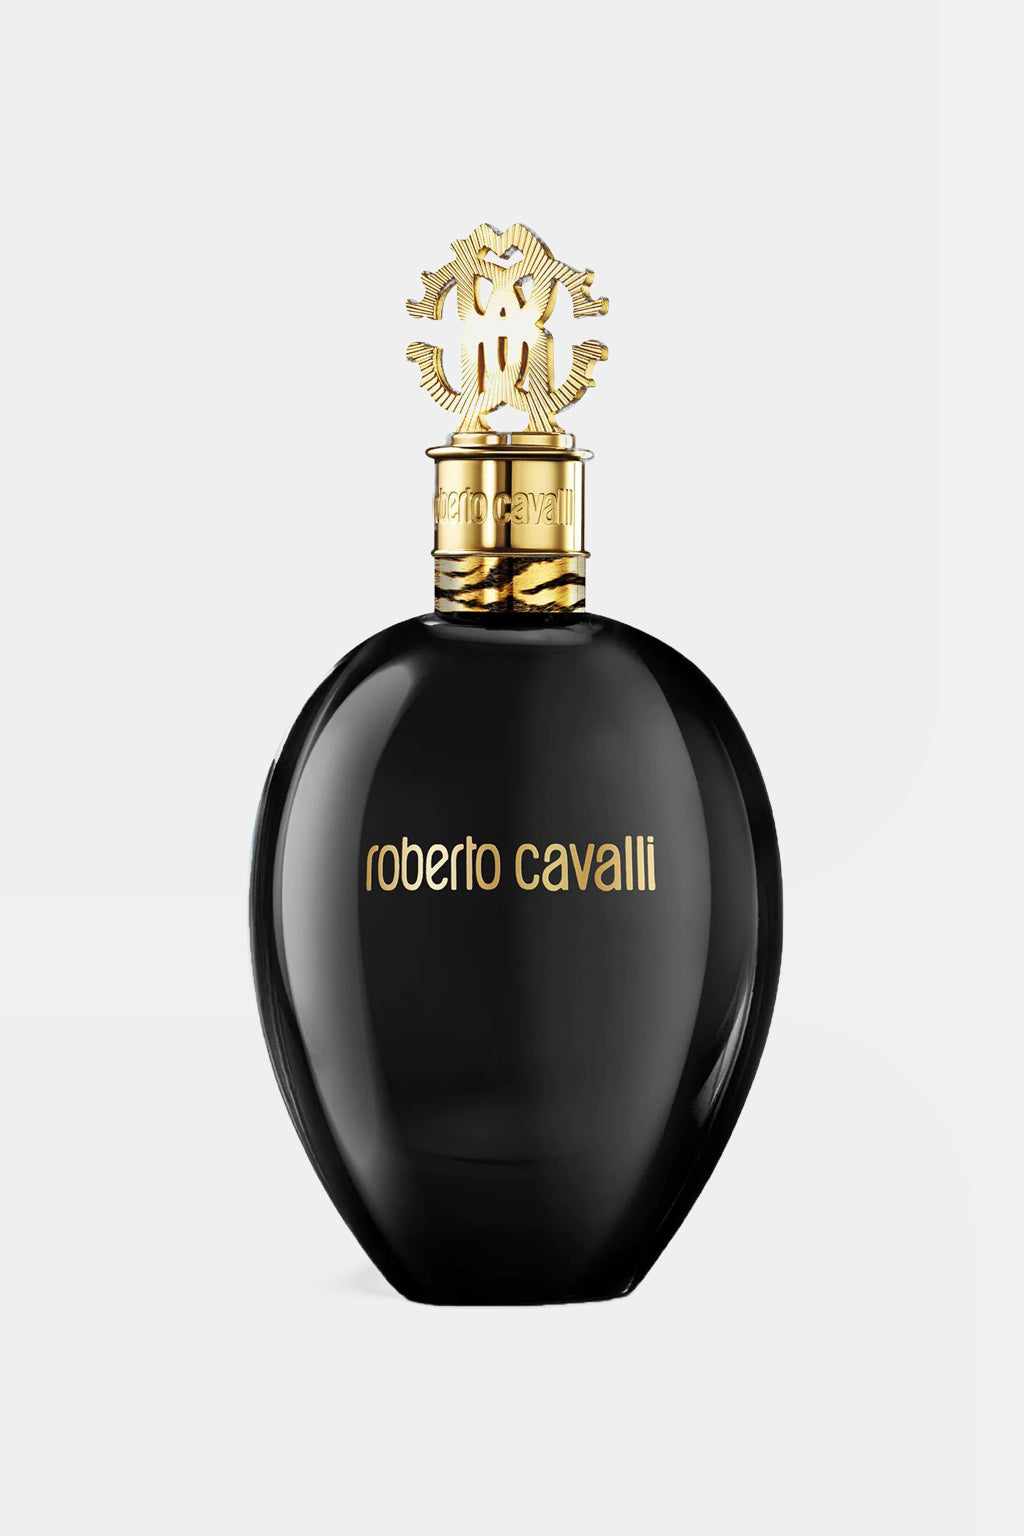 Roberto Cavalli - Nero Assoluto Eau de Parfum